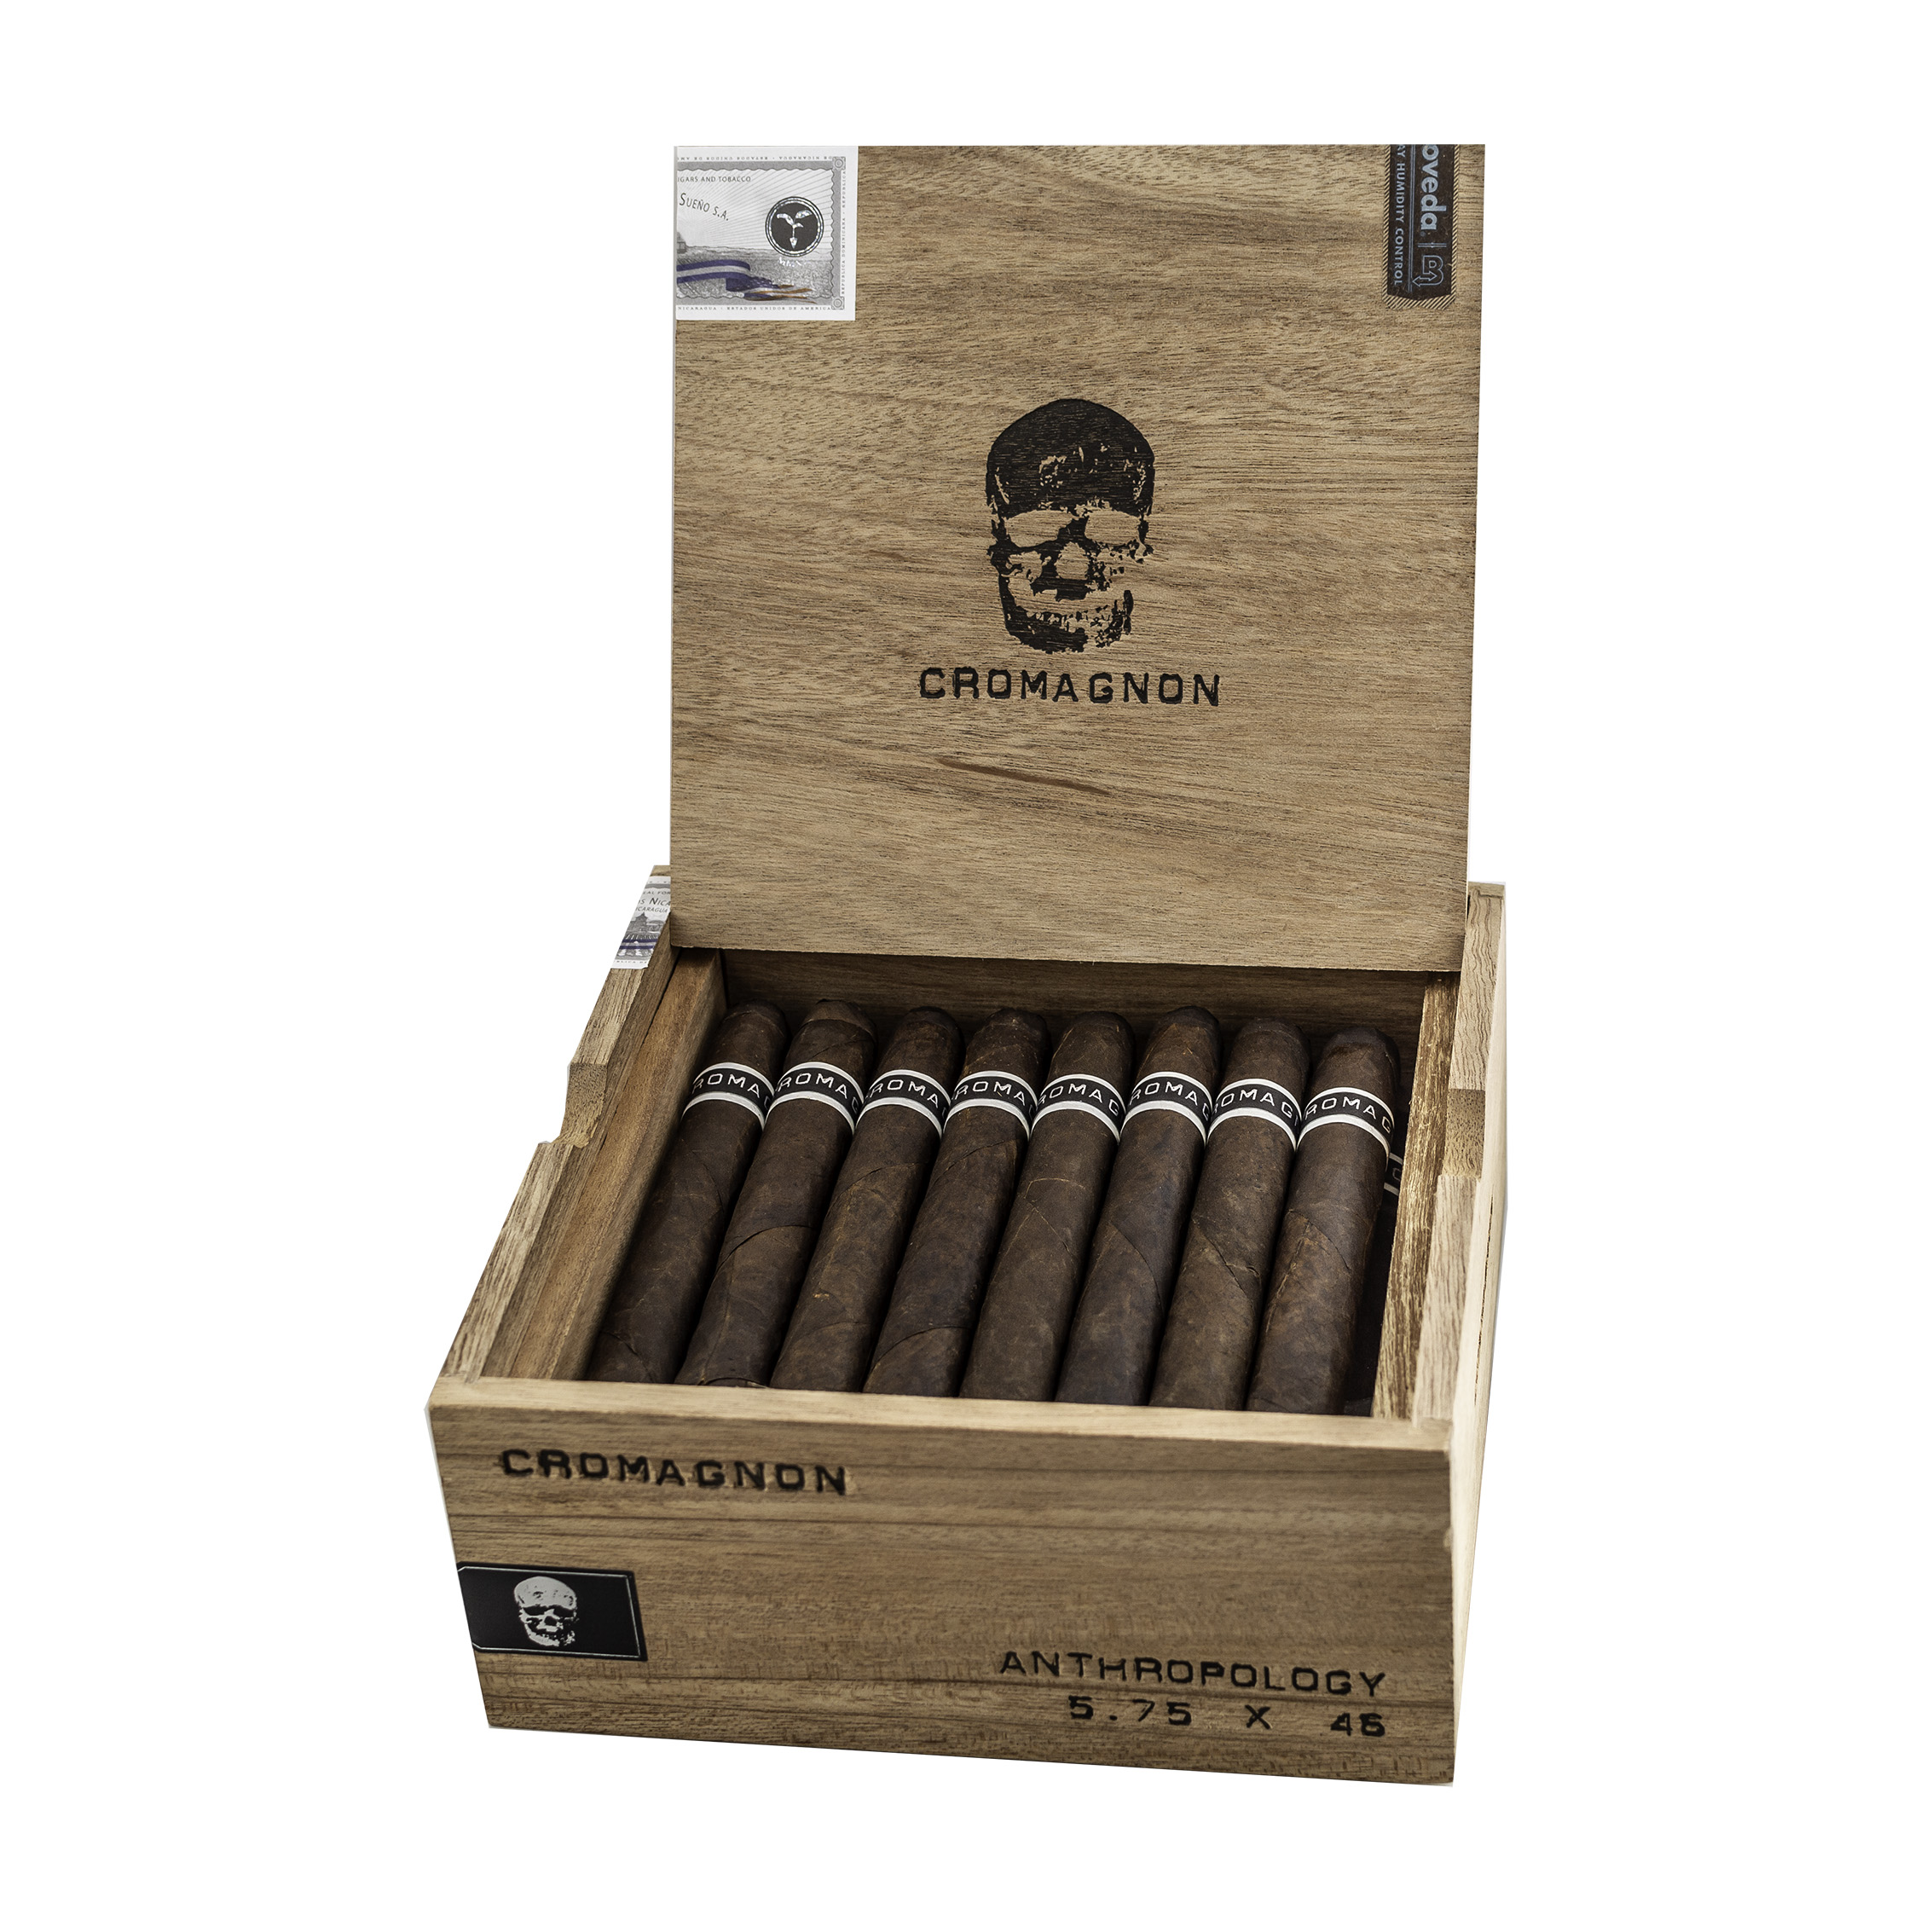 CroMagnon PA Anthropology Cigar - Box